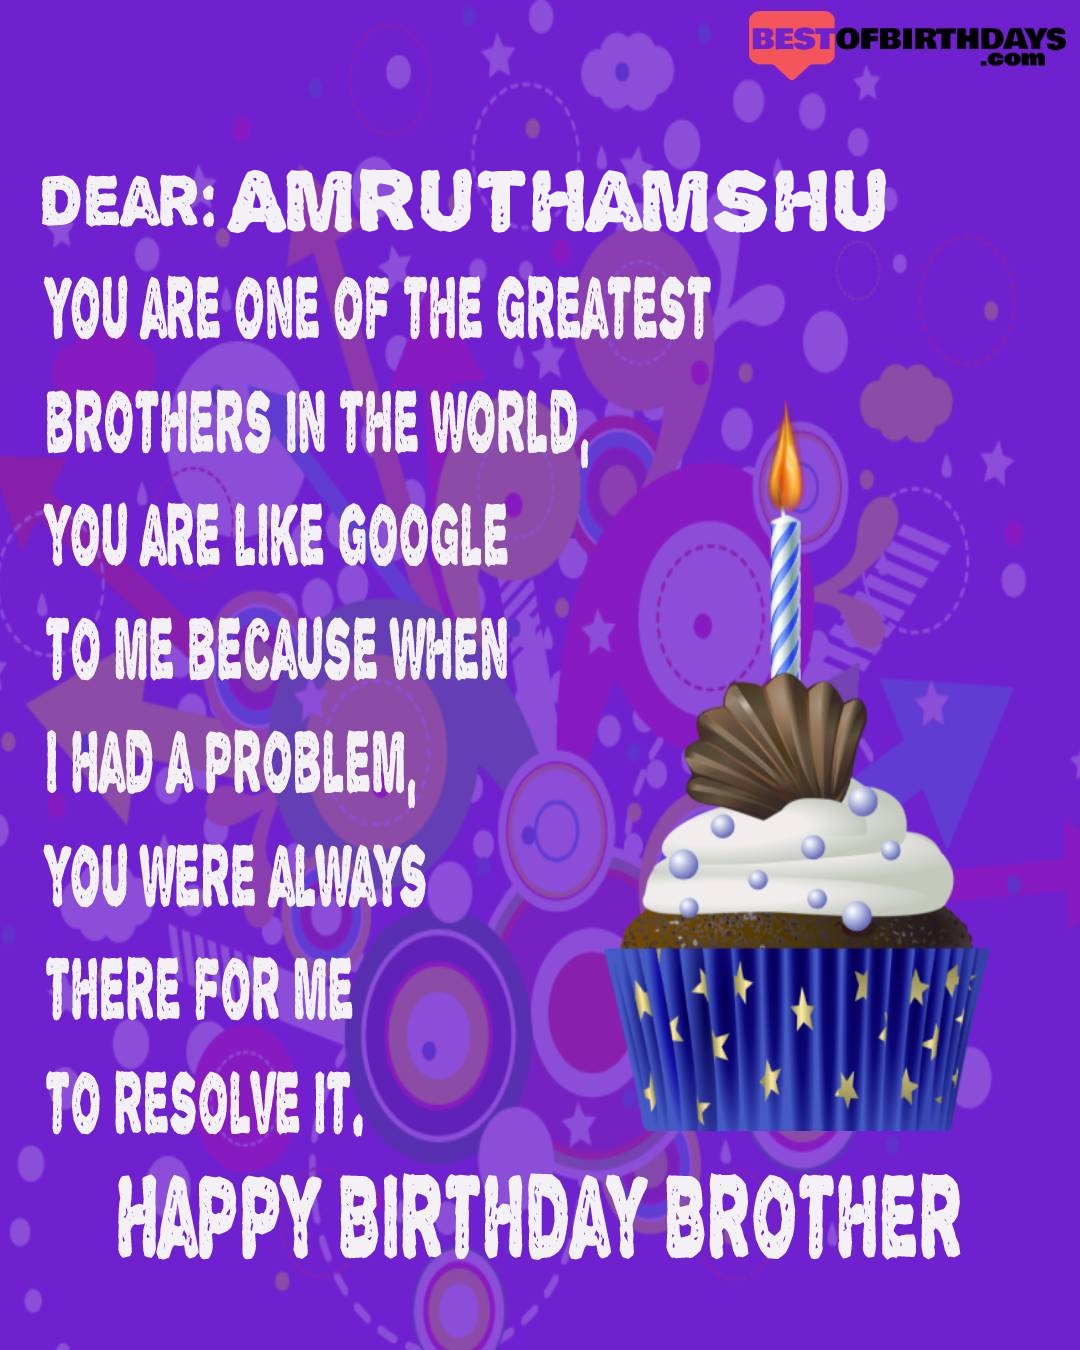 Happy birthday amruthamshu bhai brother bro